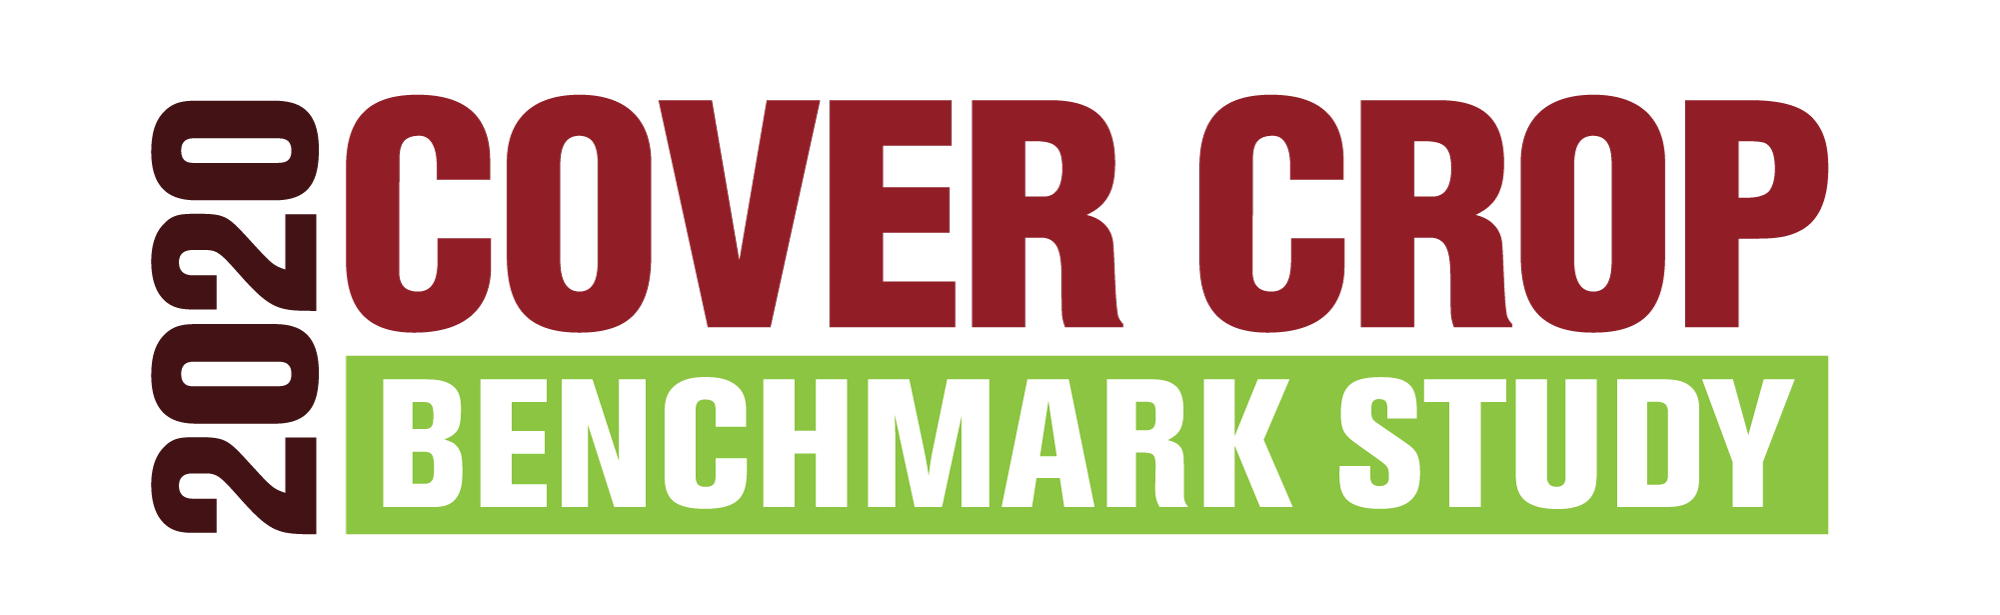 Cover Crop Benchmark Study Logo